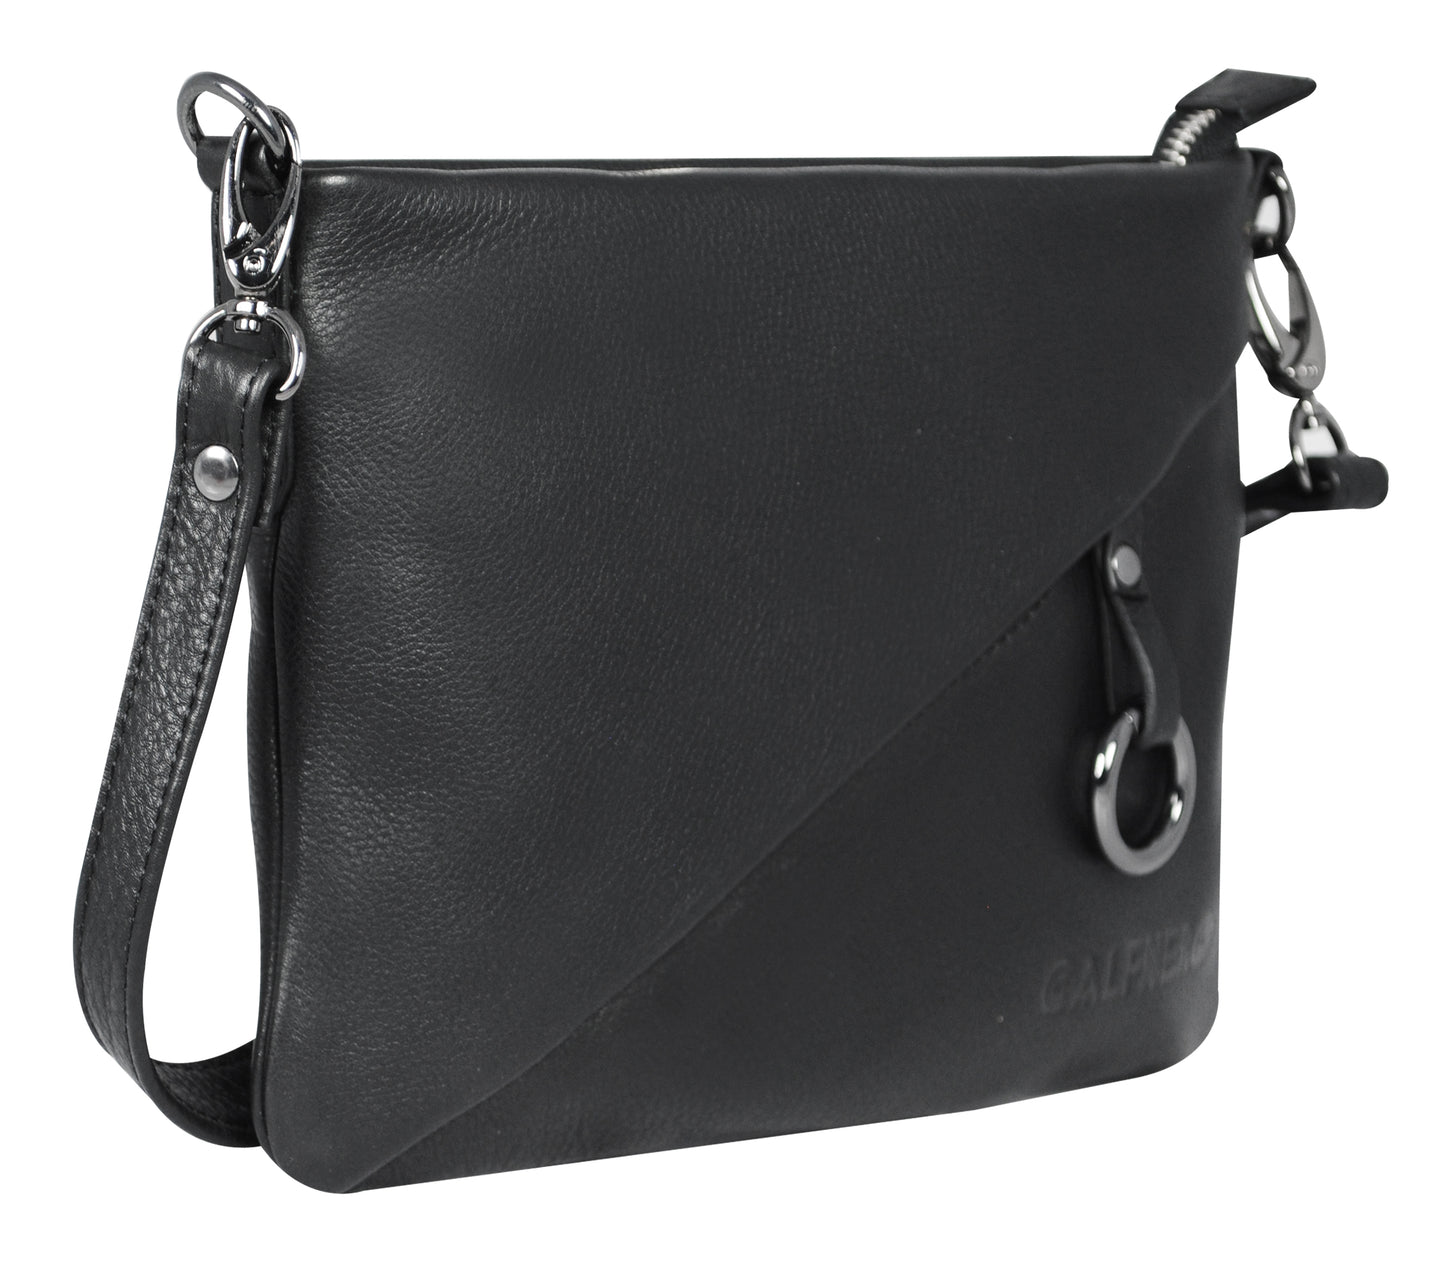 Calfnero Genuine Leather Women's Sling Bag (71002-Black)